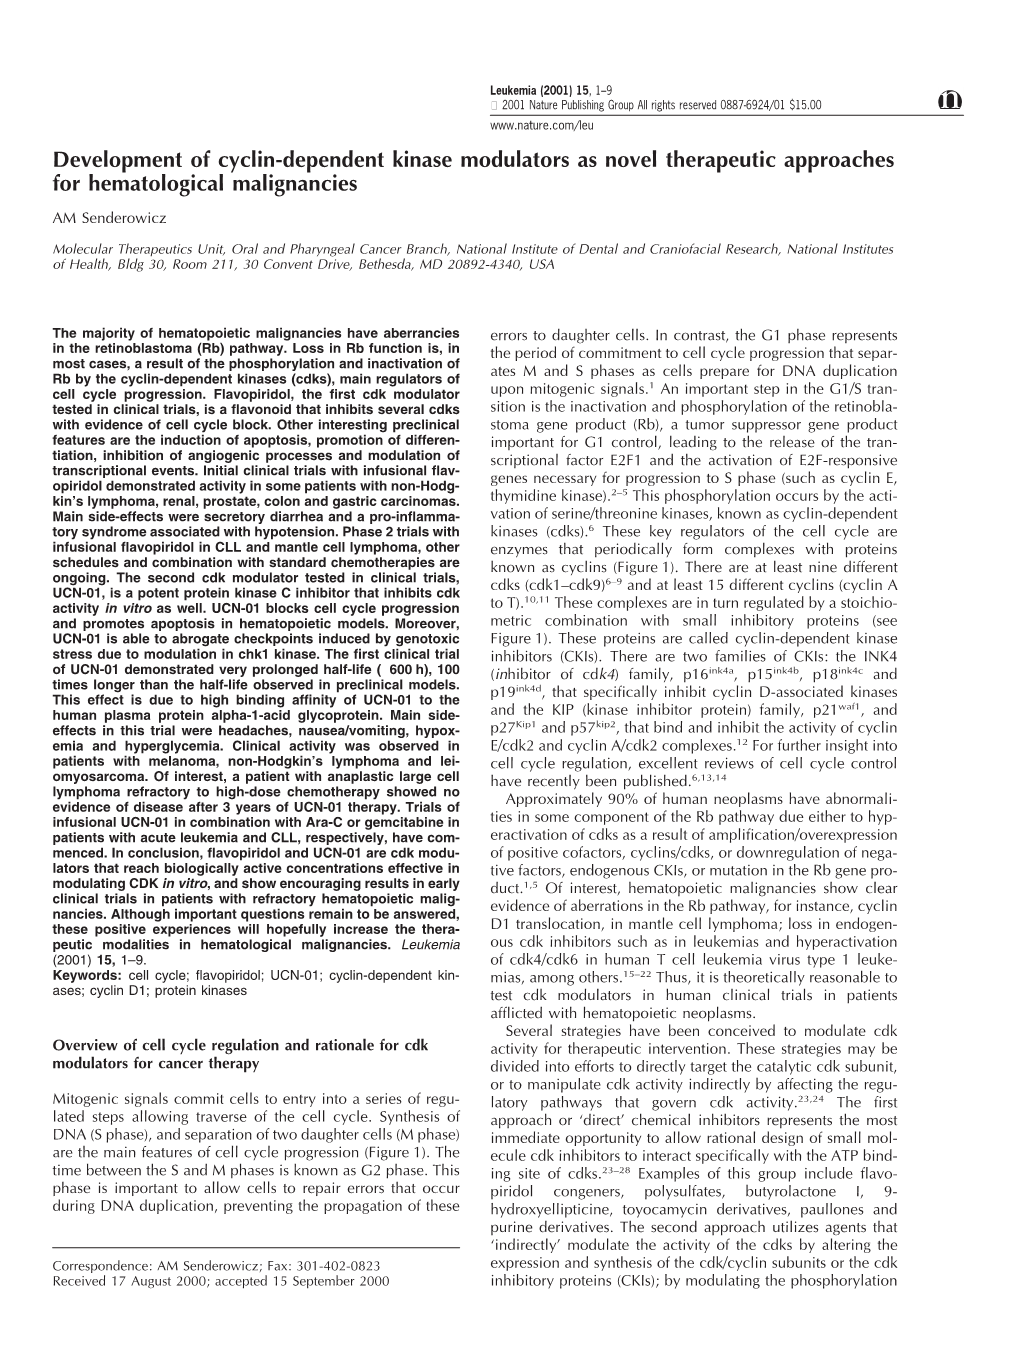 Development of Cyclin-Dependent Kinase Modulators As Novel Therapeutic Approaches for Hematological Malignancies AM Senderowicz